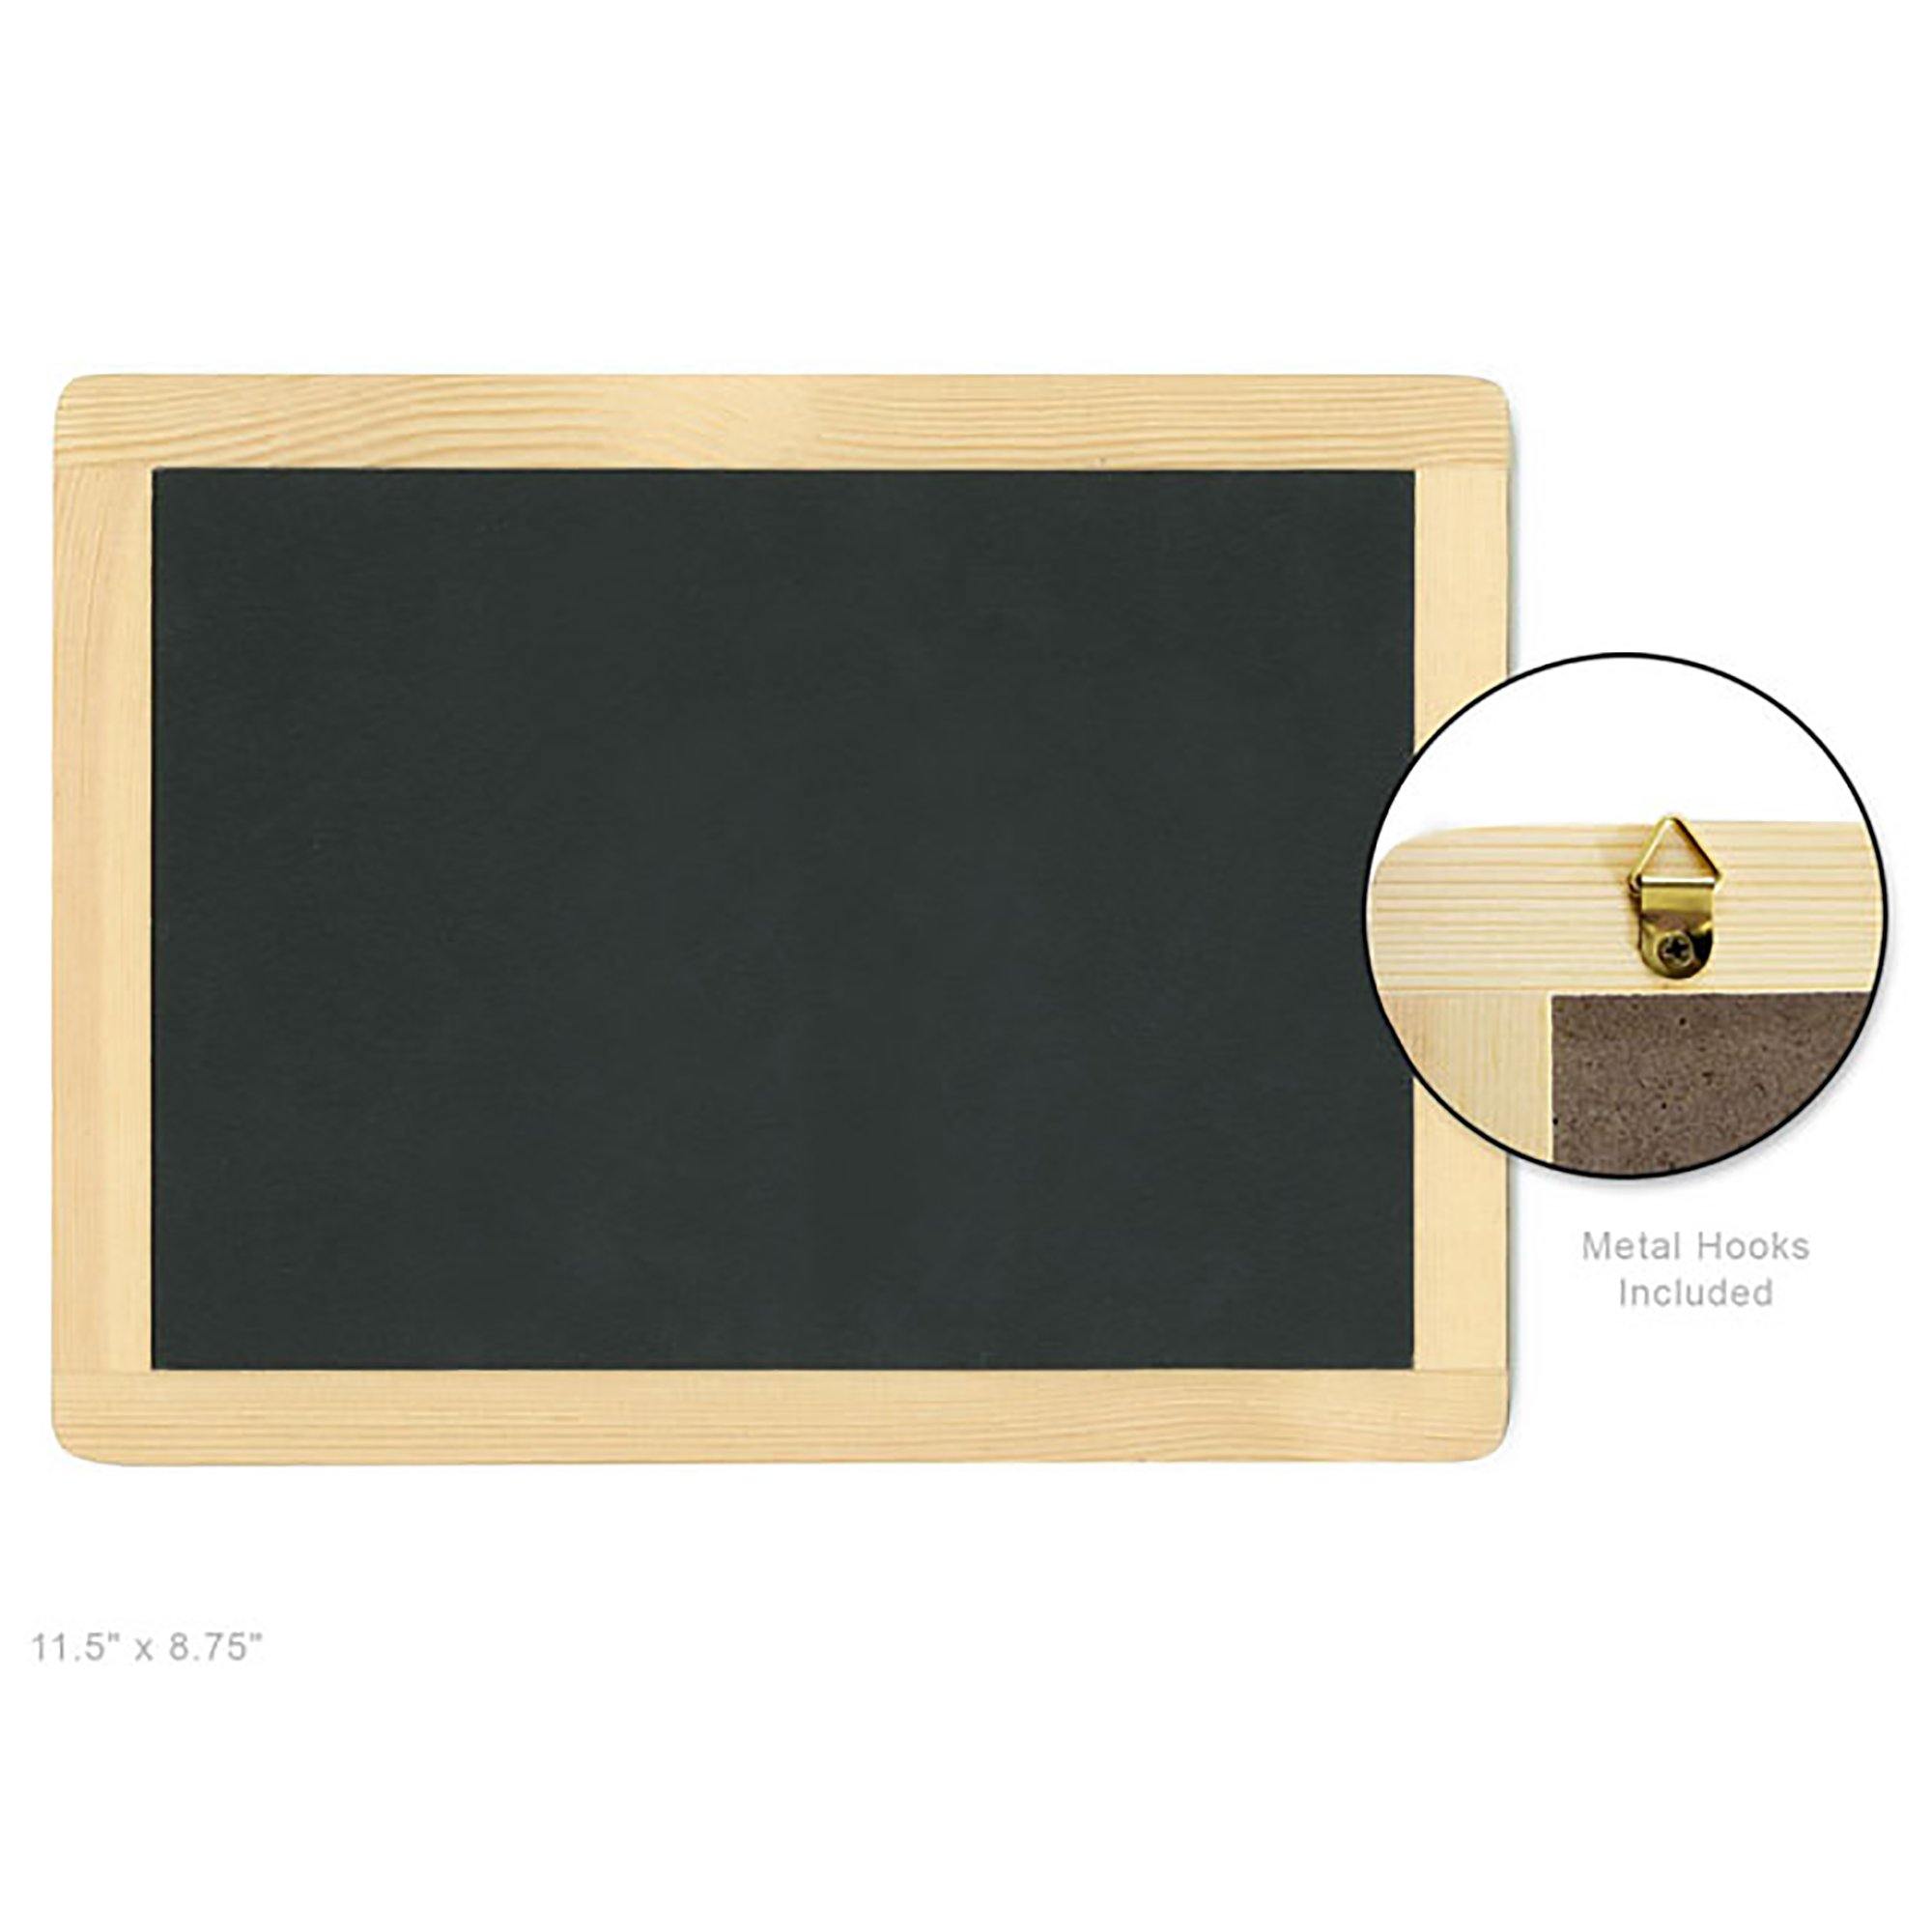 Wood Craft: 11.5"X8.75" Natural Diy Chalkboard Frame W/Metal Hooks - Dollar Max Dépôt